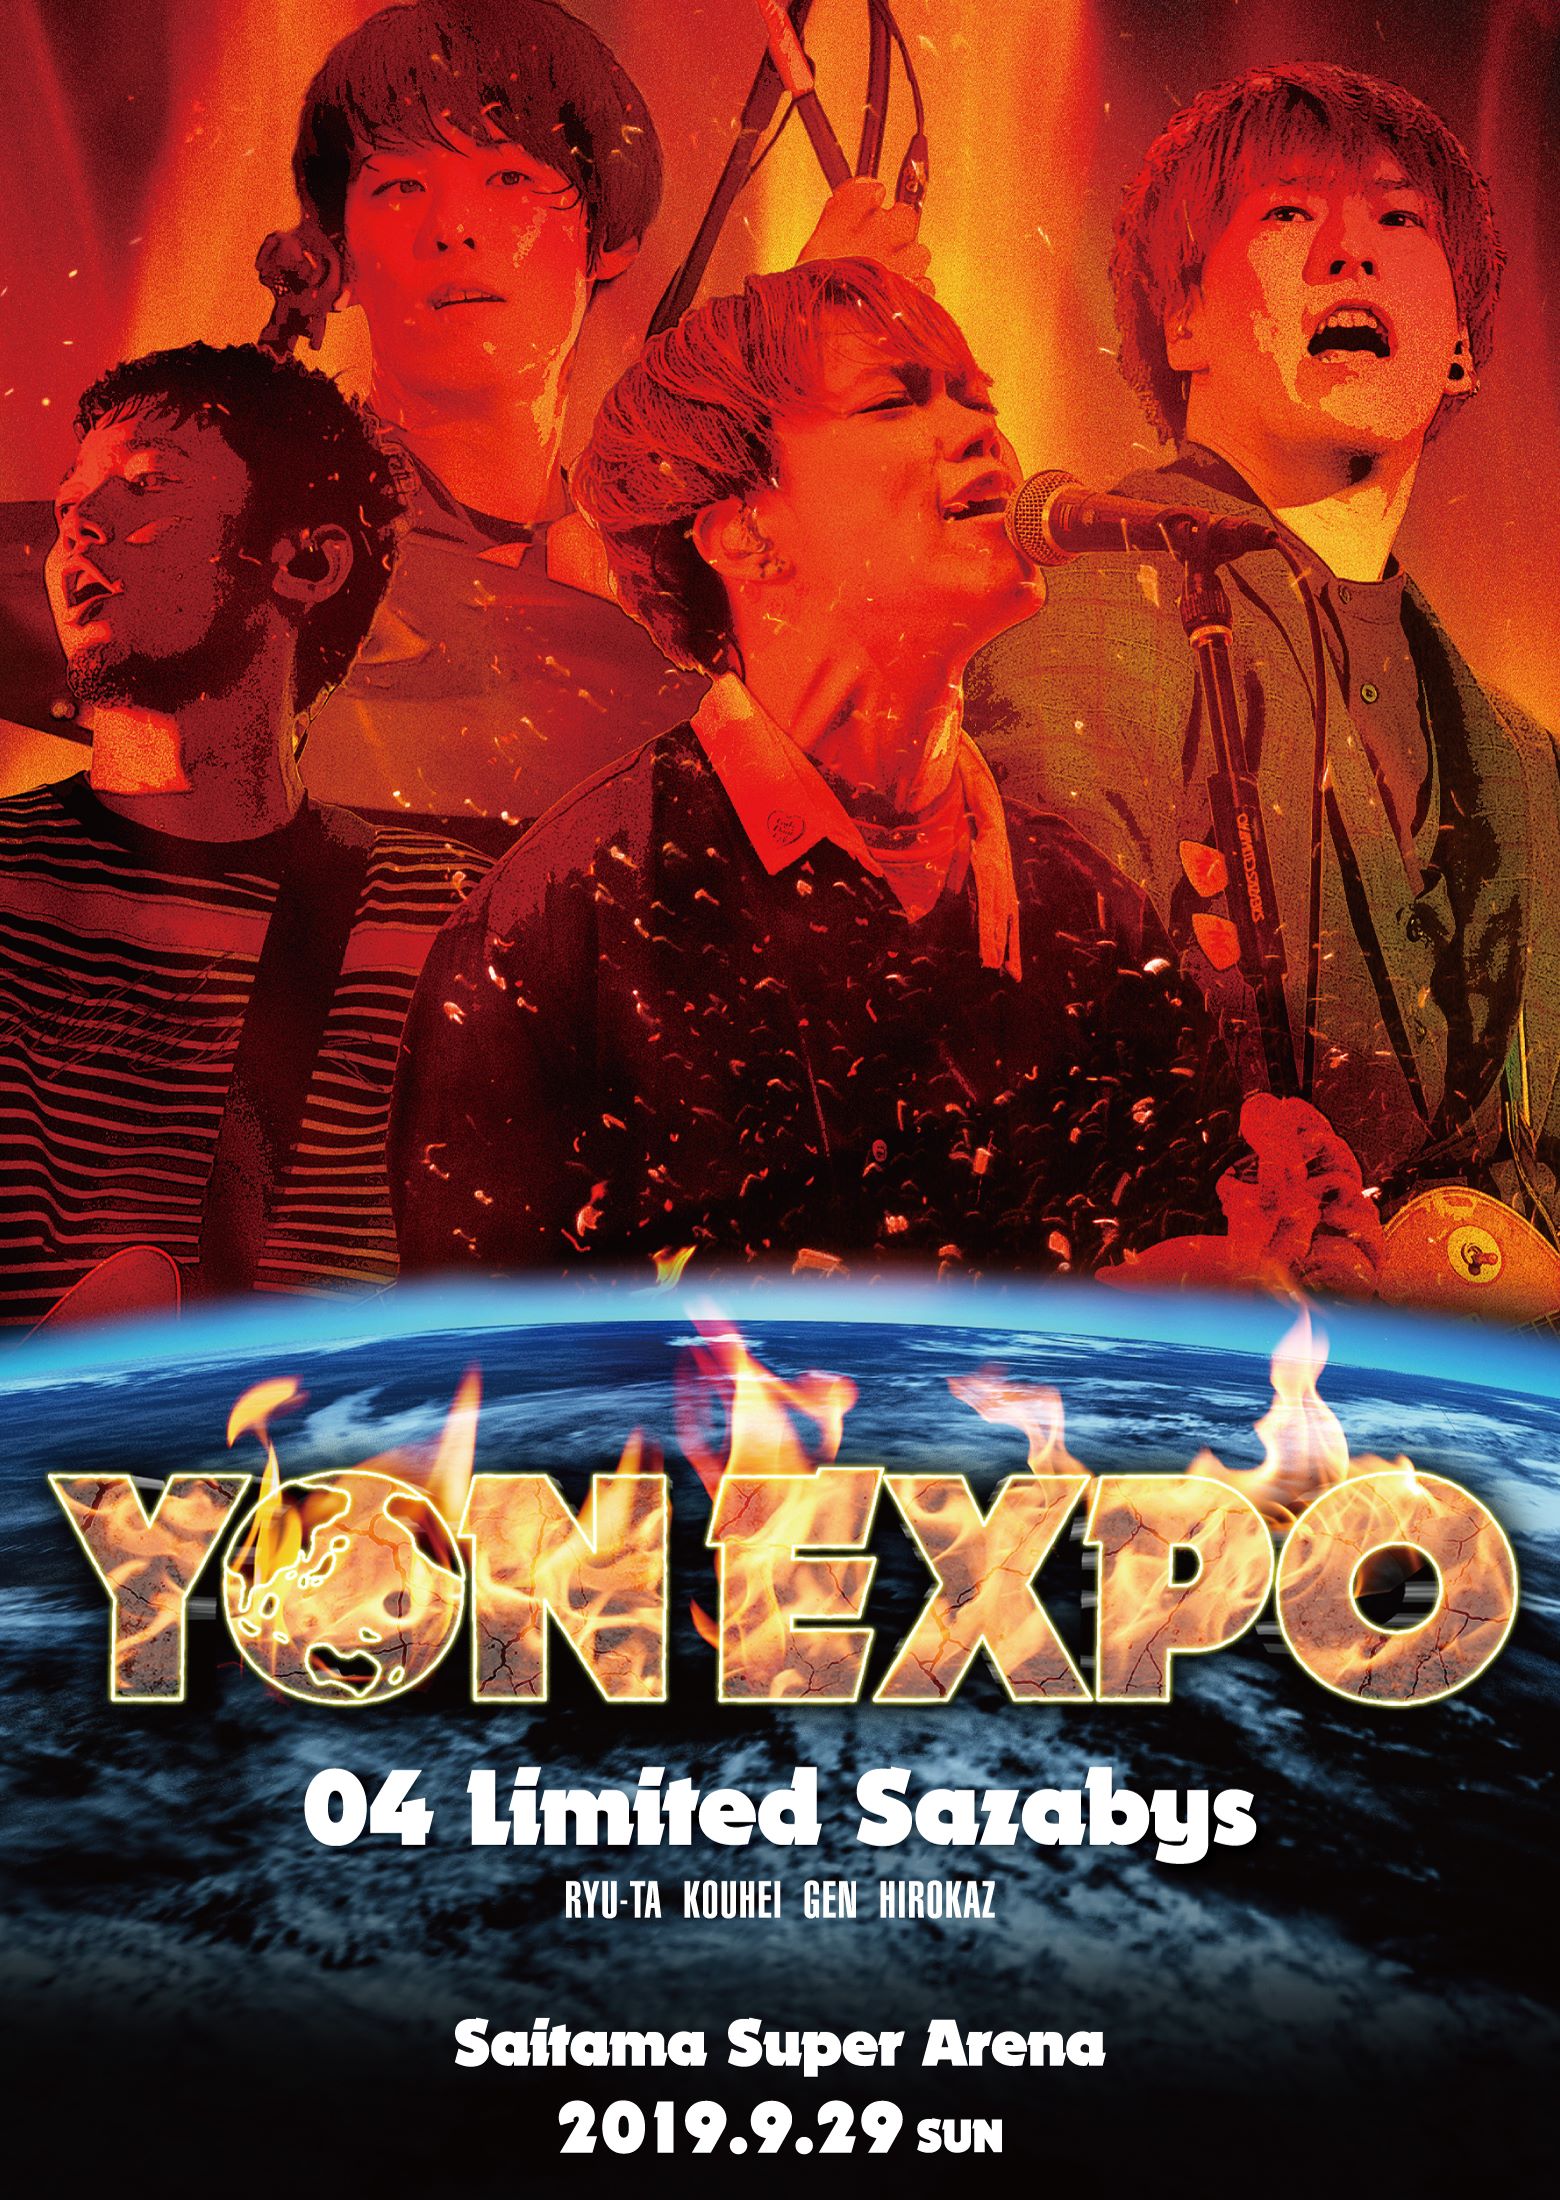 04 Limited Sazabys さいたまスーパーアリーナ単独公演 Yon Expo の映像を1月22日発売 日本コロムビア株式会社のプレスリリース